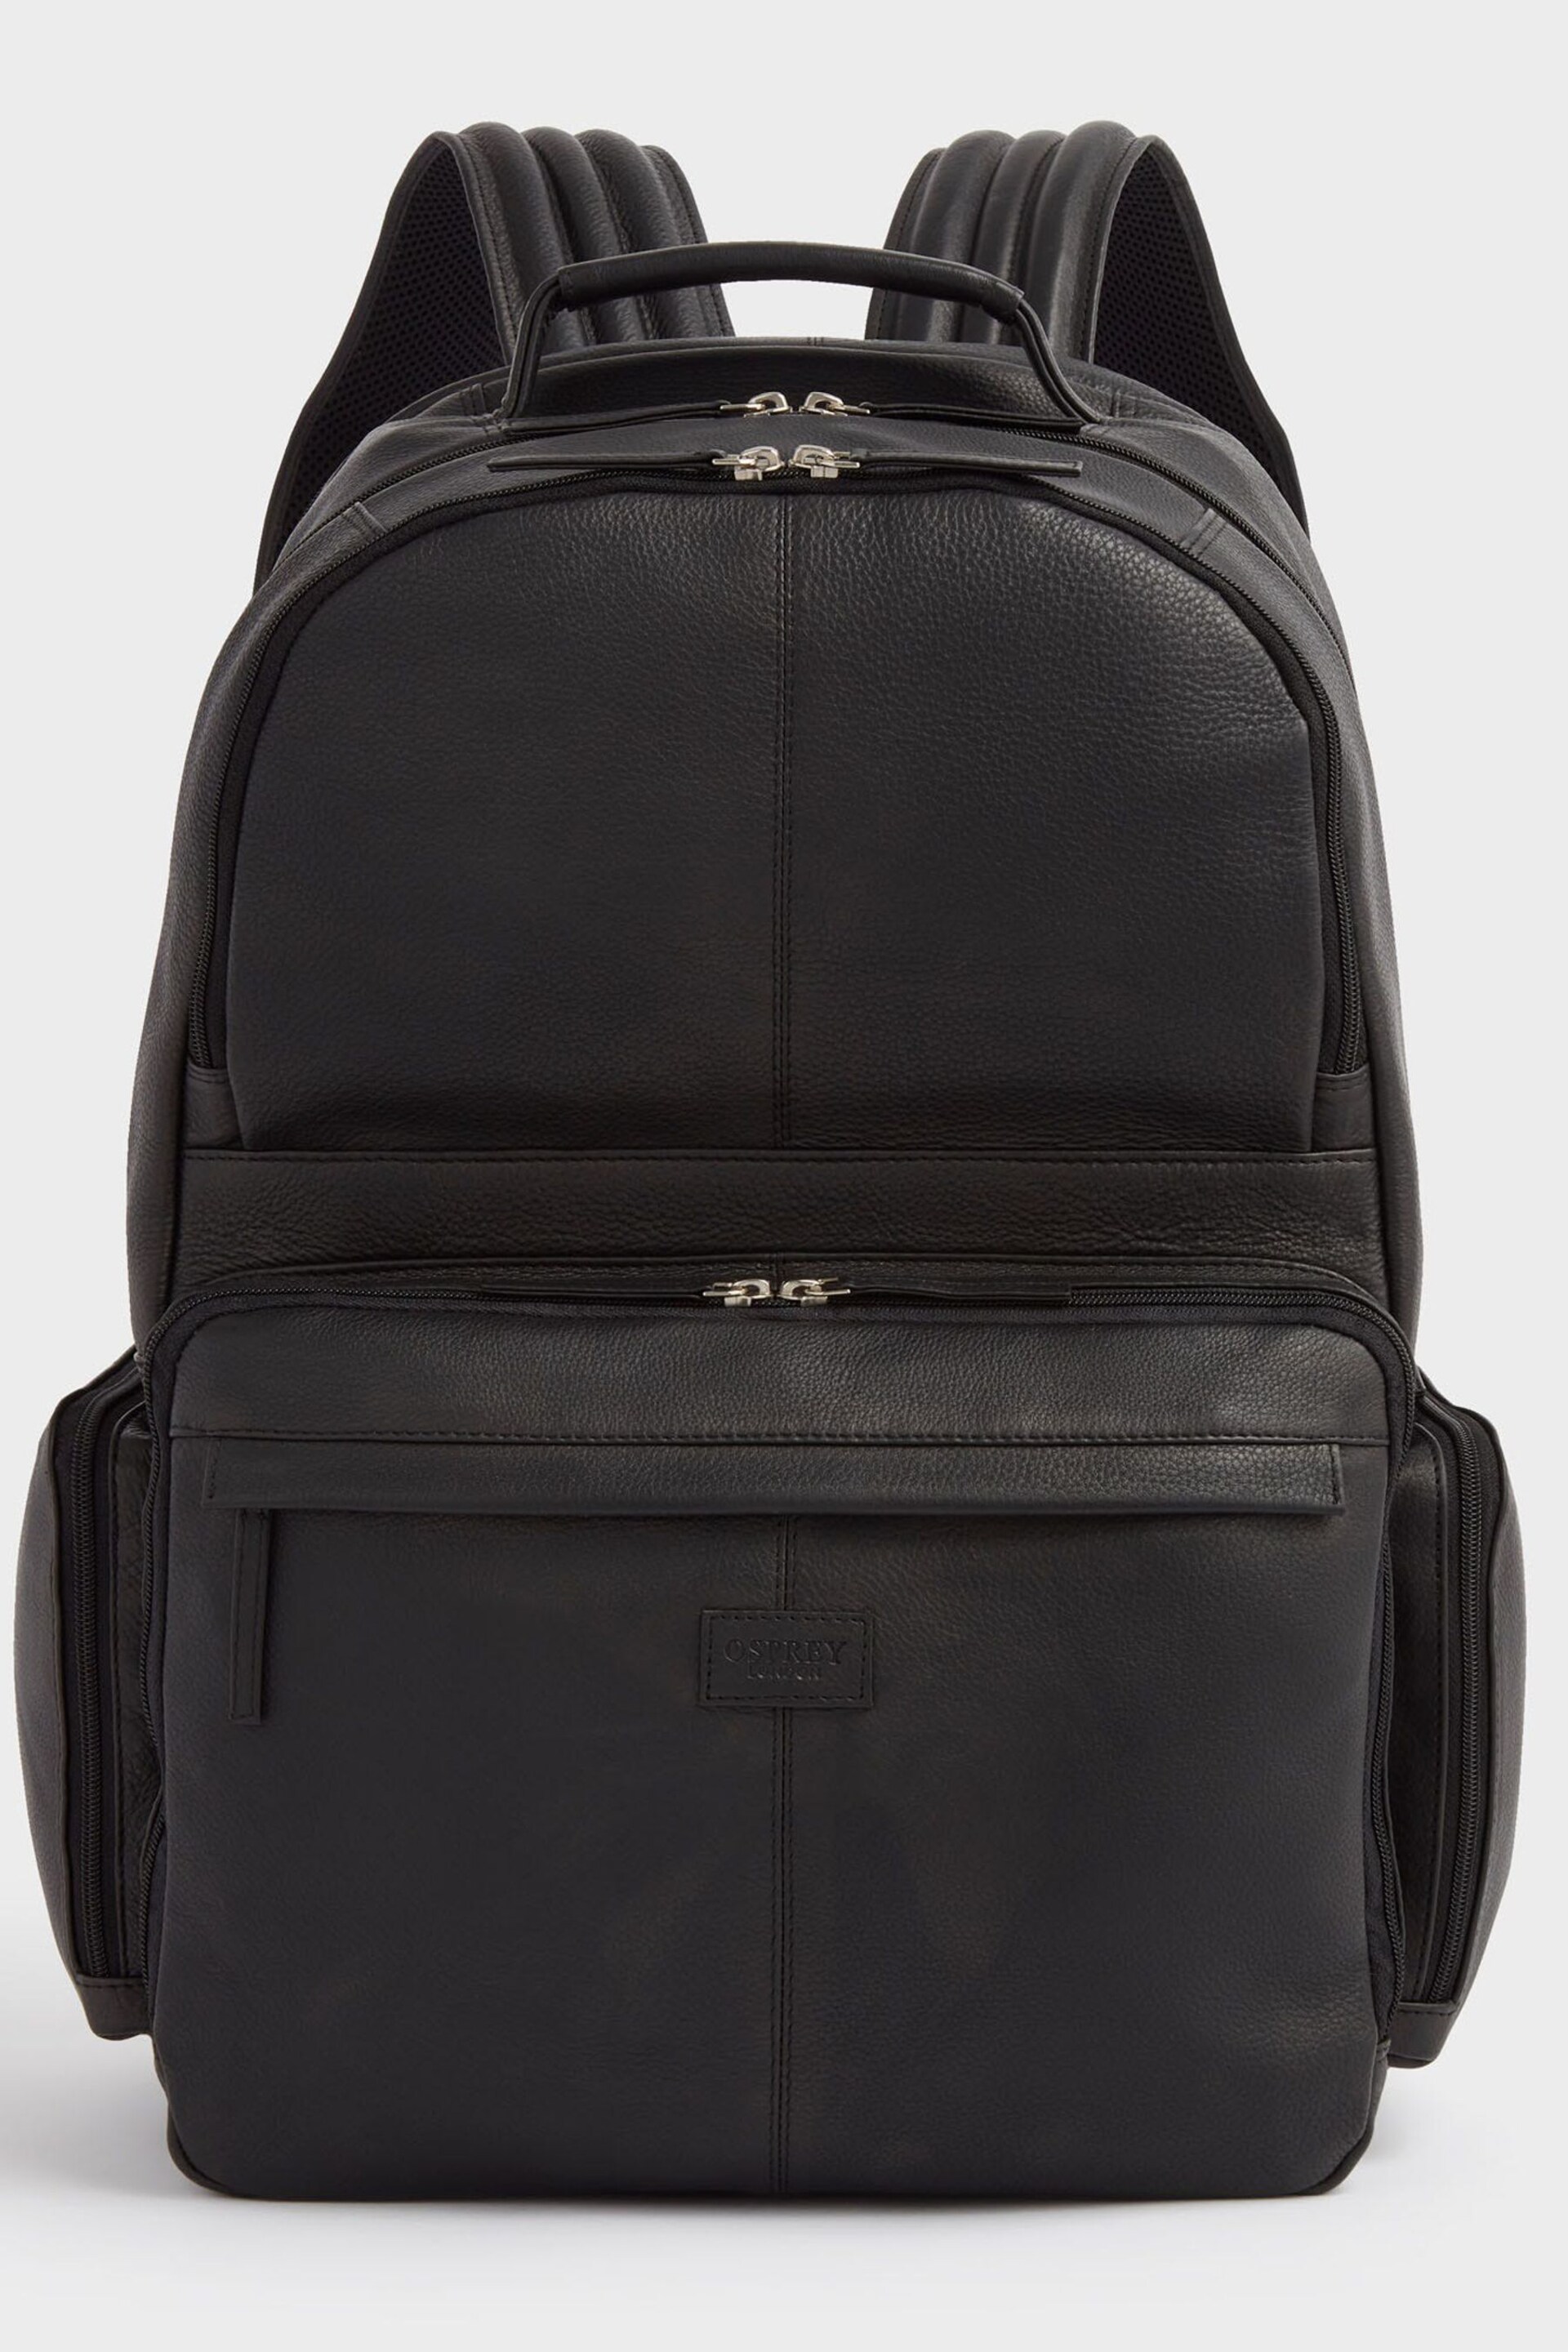 OSPREY LONDON The Lockton Black Leather Backpack - Image 1 of 4